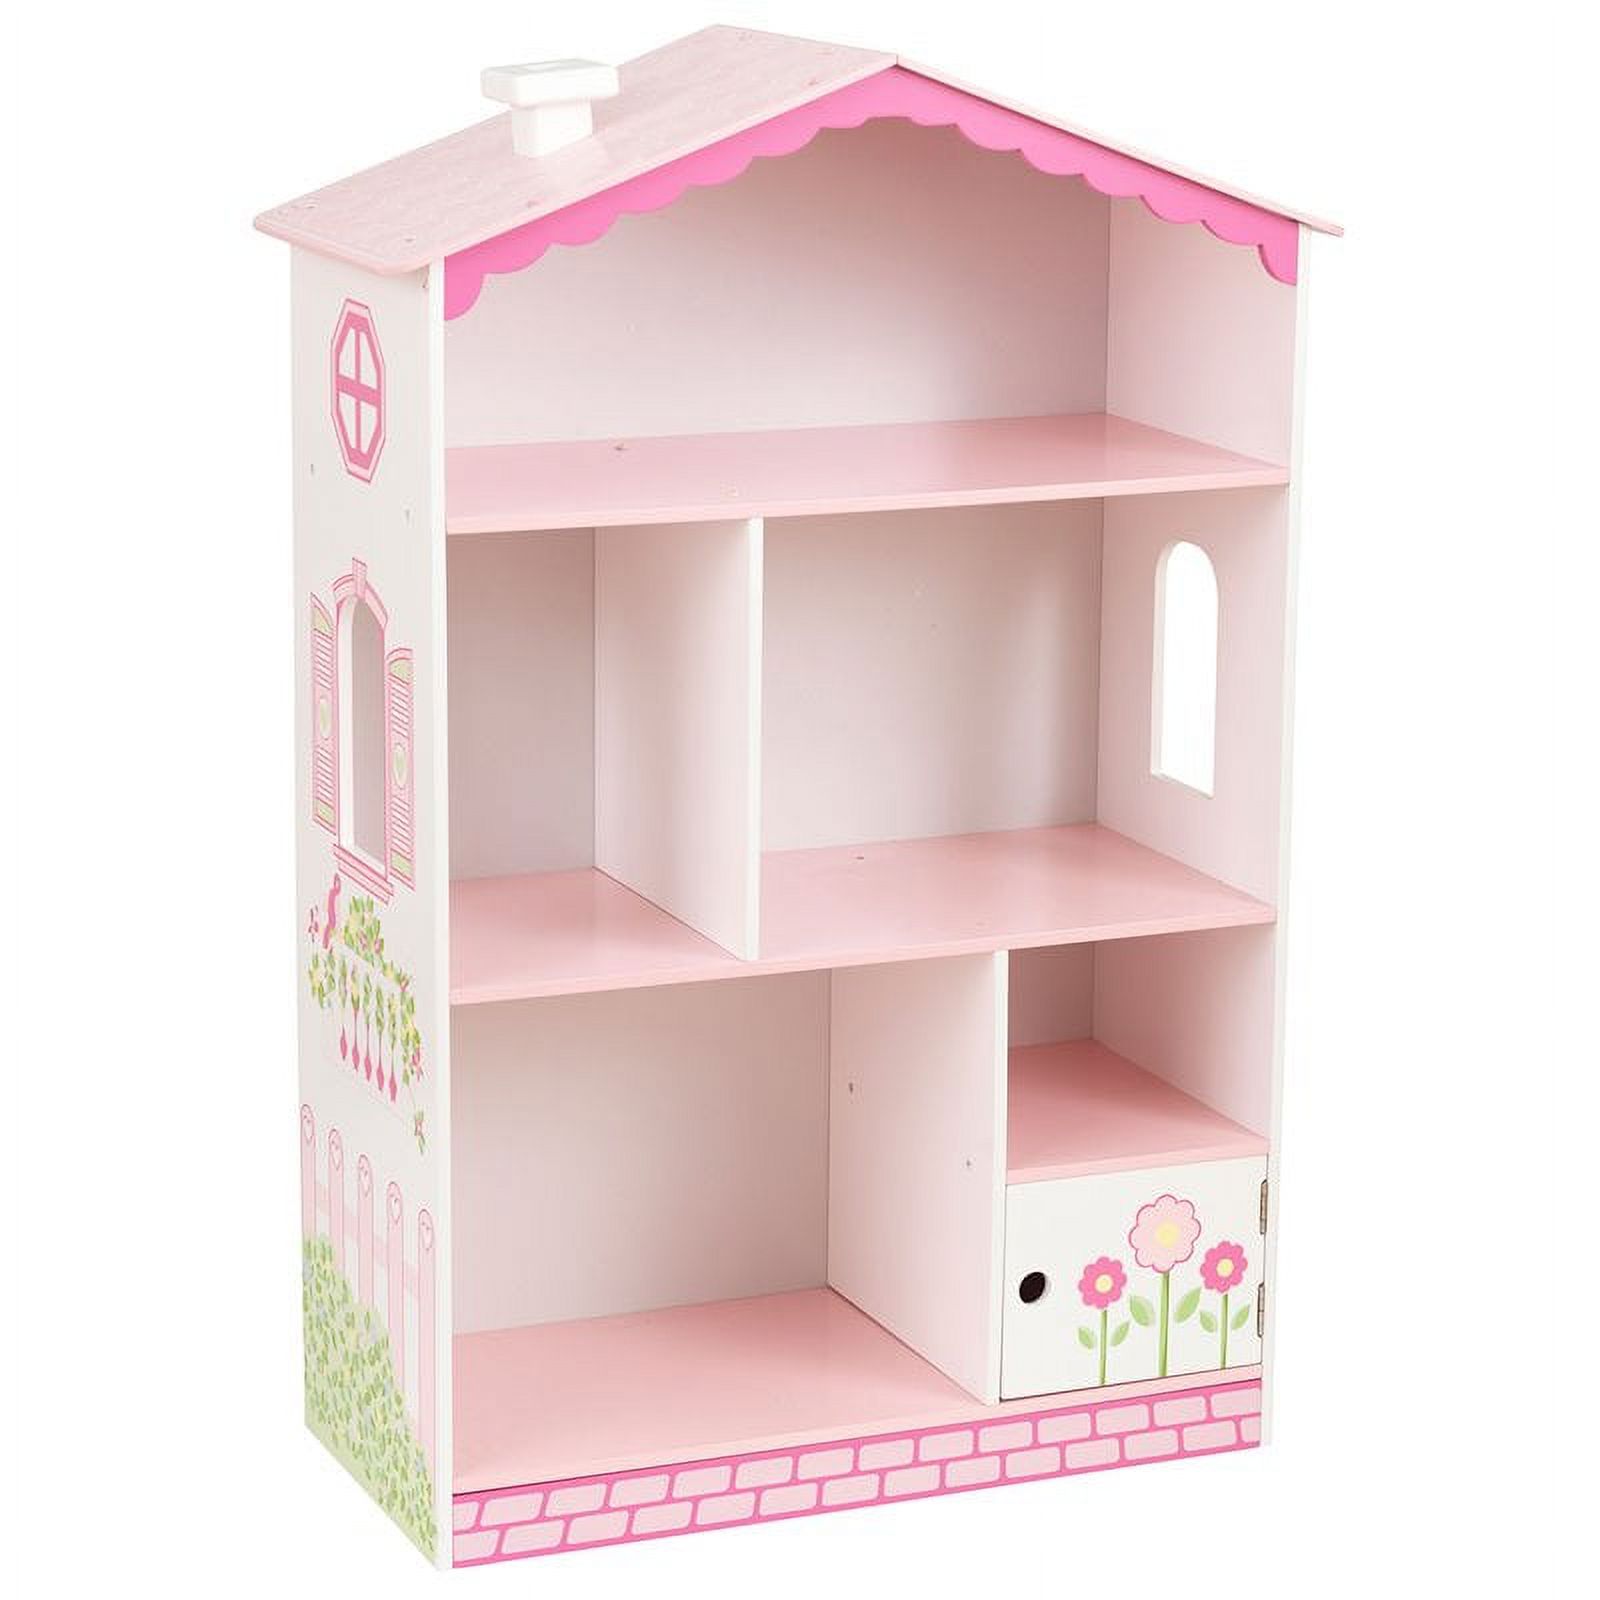 KidKraft Dollhouse Cottage Wooden Bookcase, Pink & White - image 2 of 10